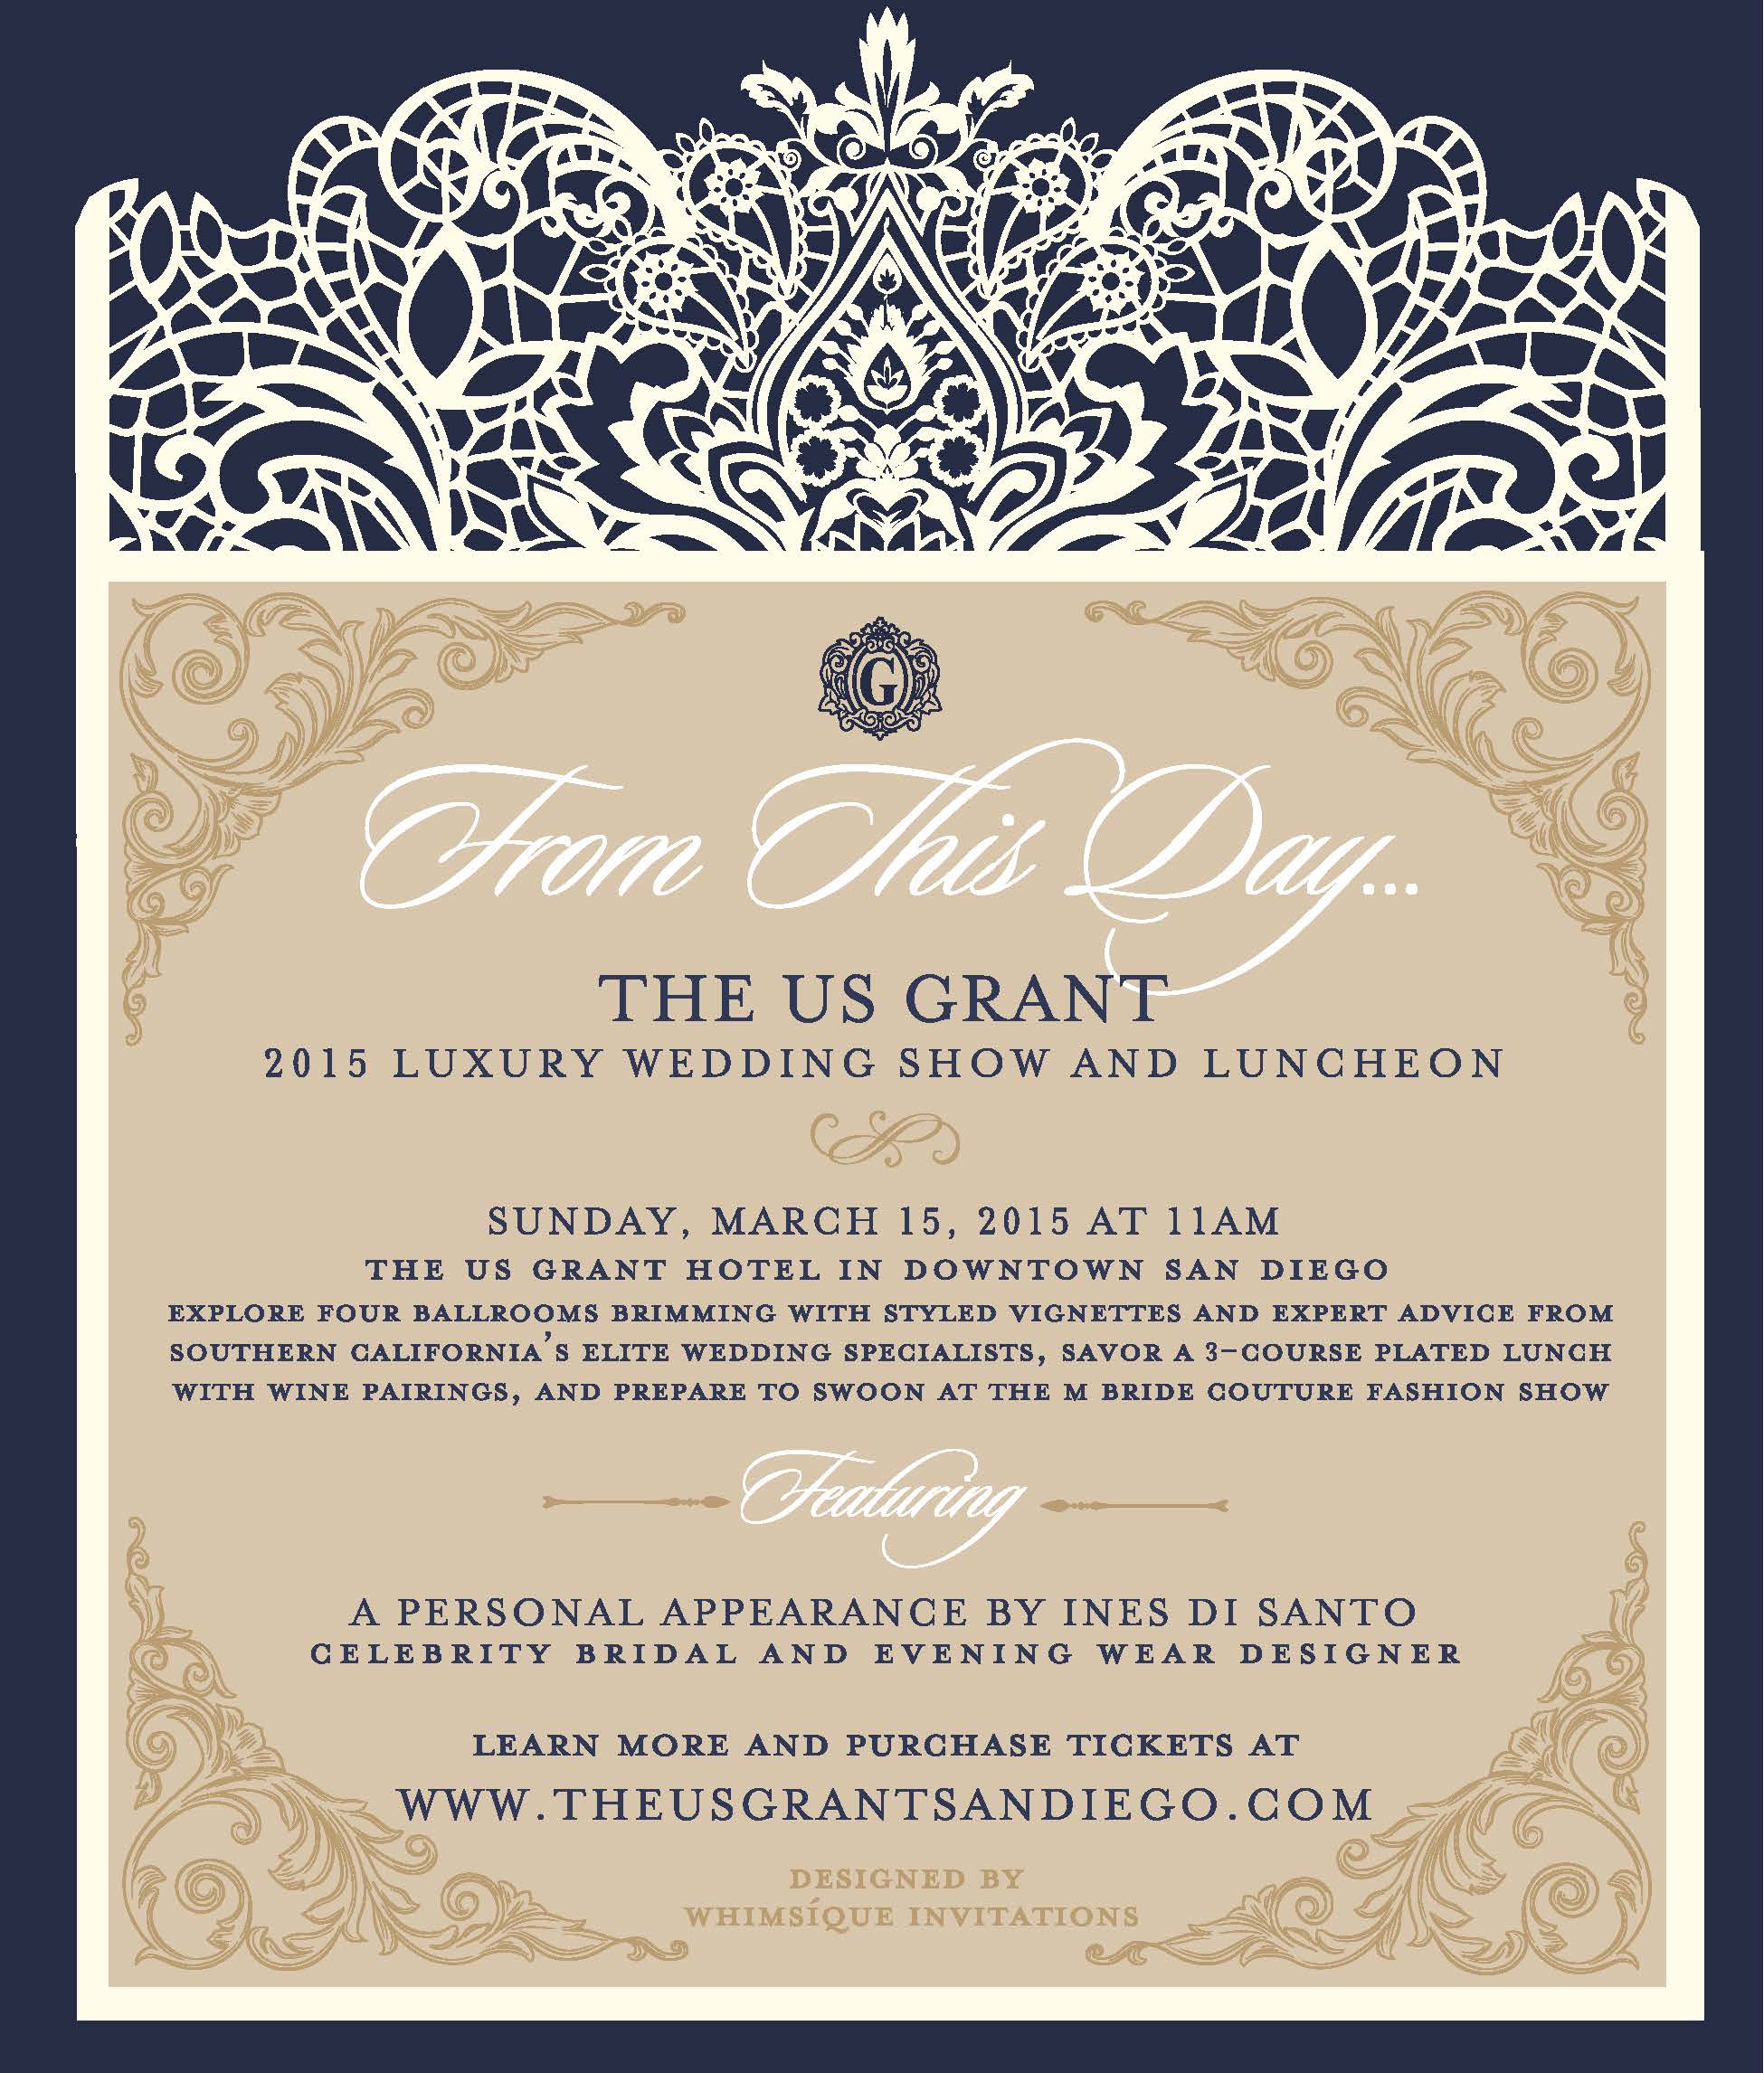 THE US GRANT San Diego 2015 Luxury Wedding Show